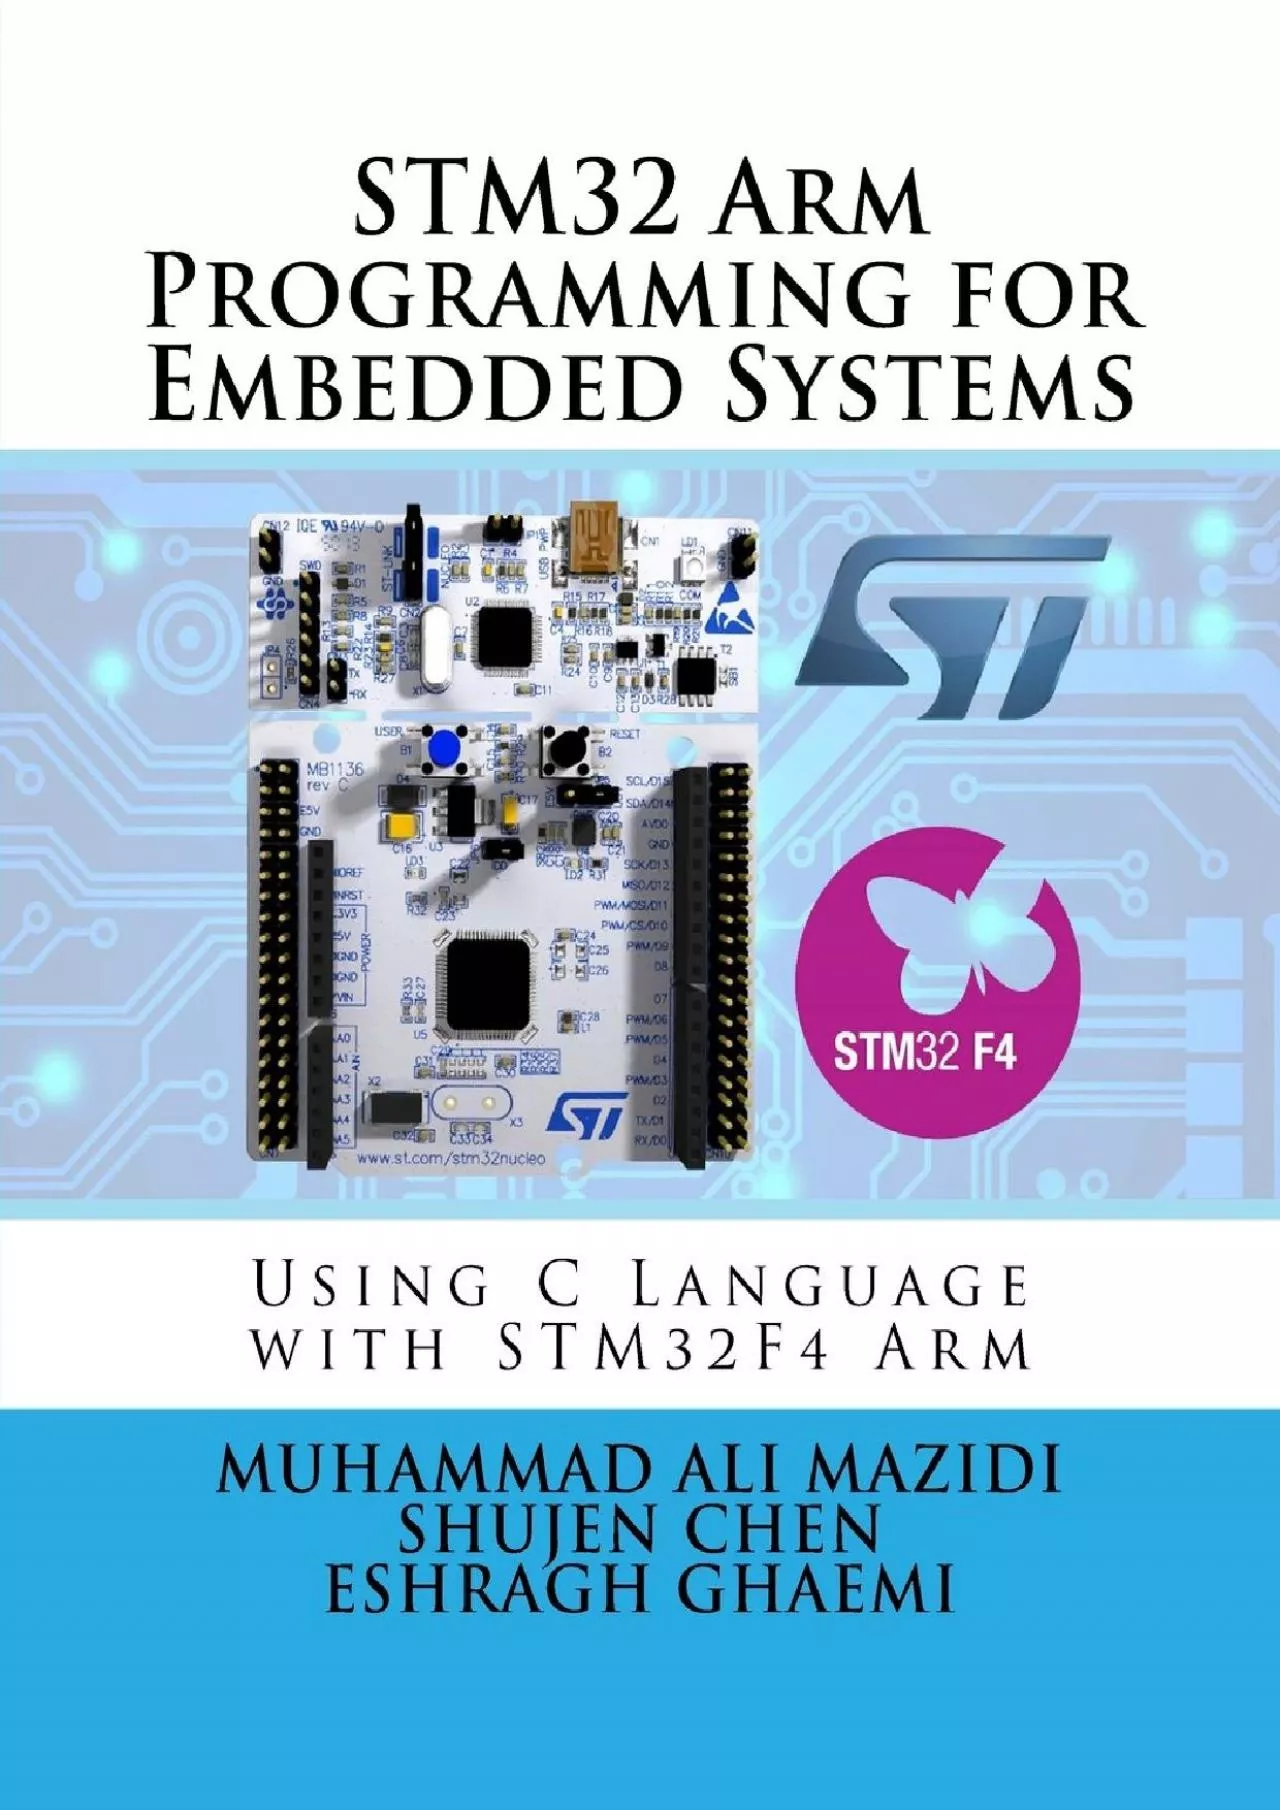 [DOWLOAD]-STM32 Arm Programming for Embedded Systems (Mazidi & Naimi ARM)